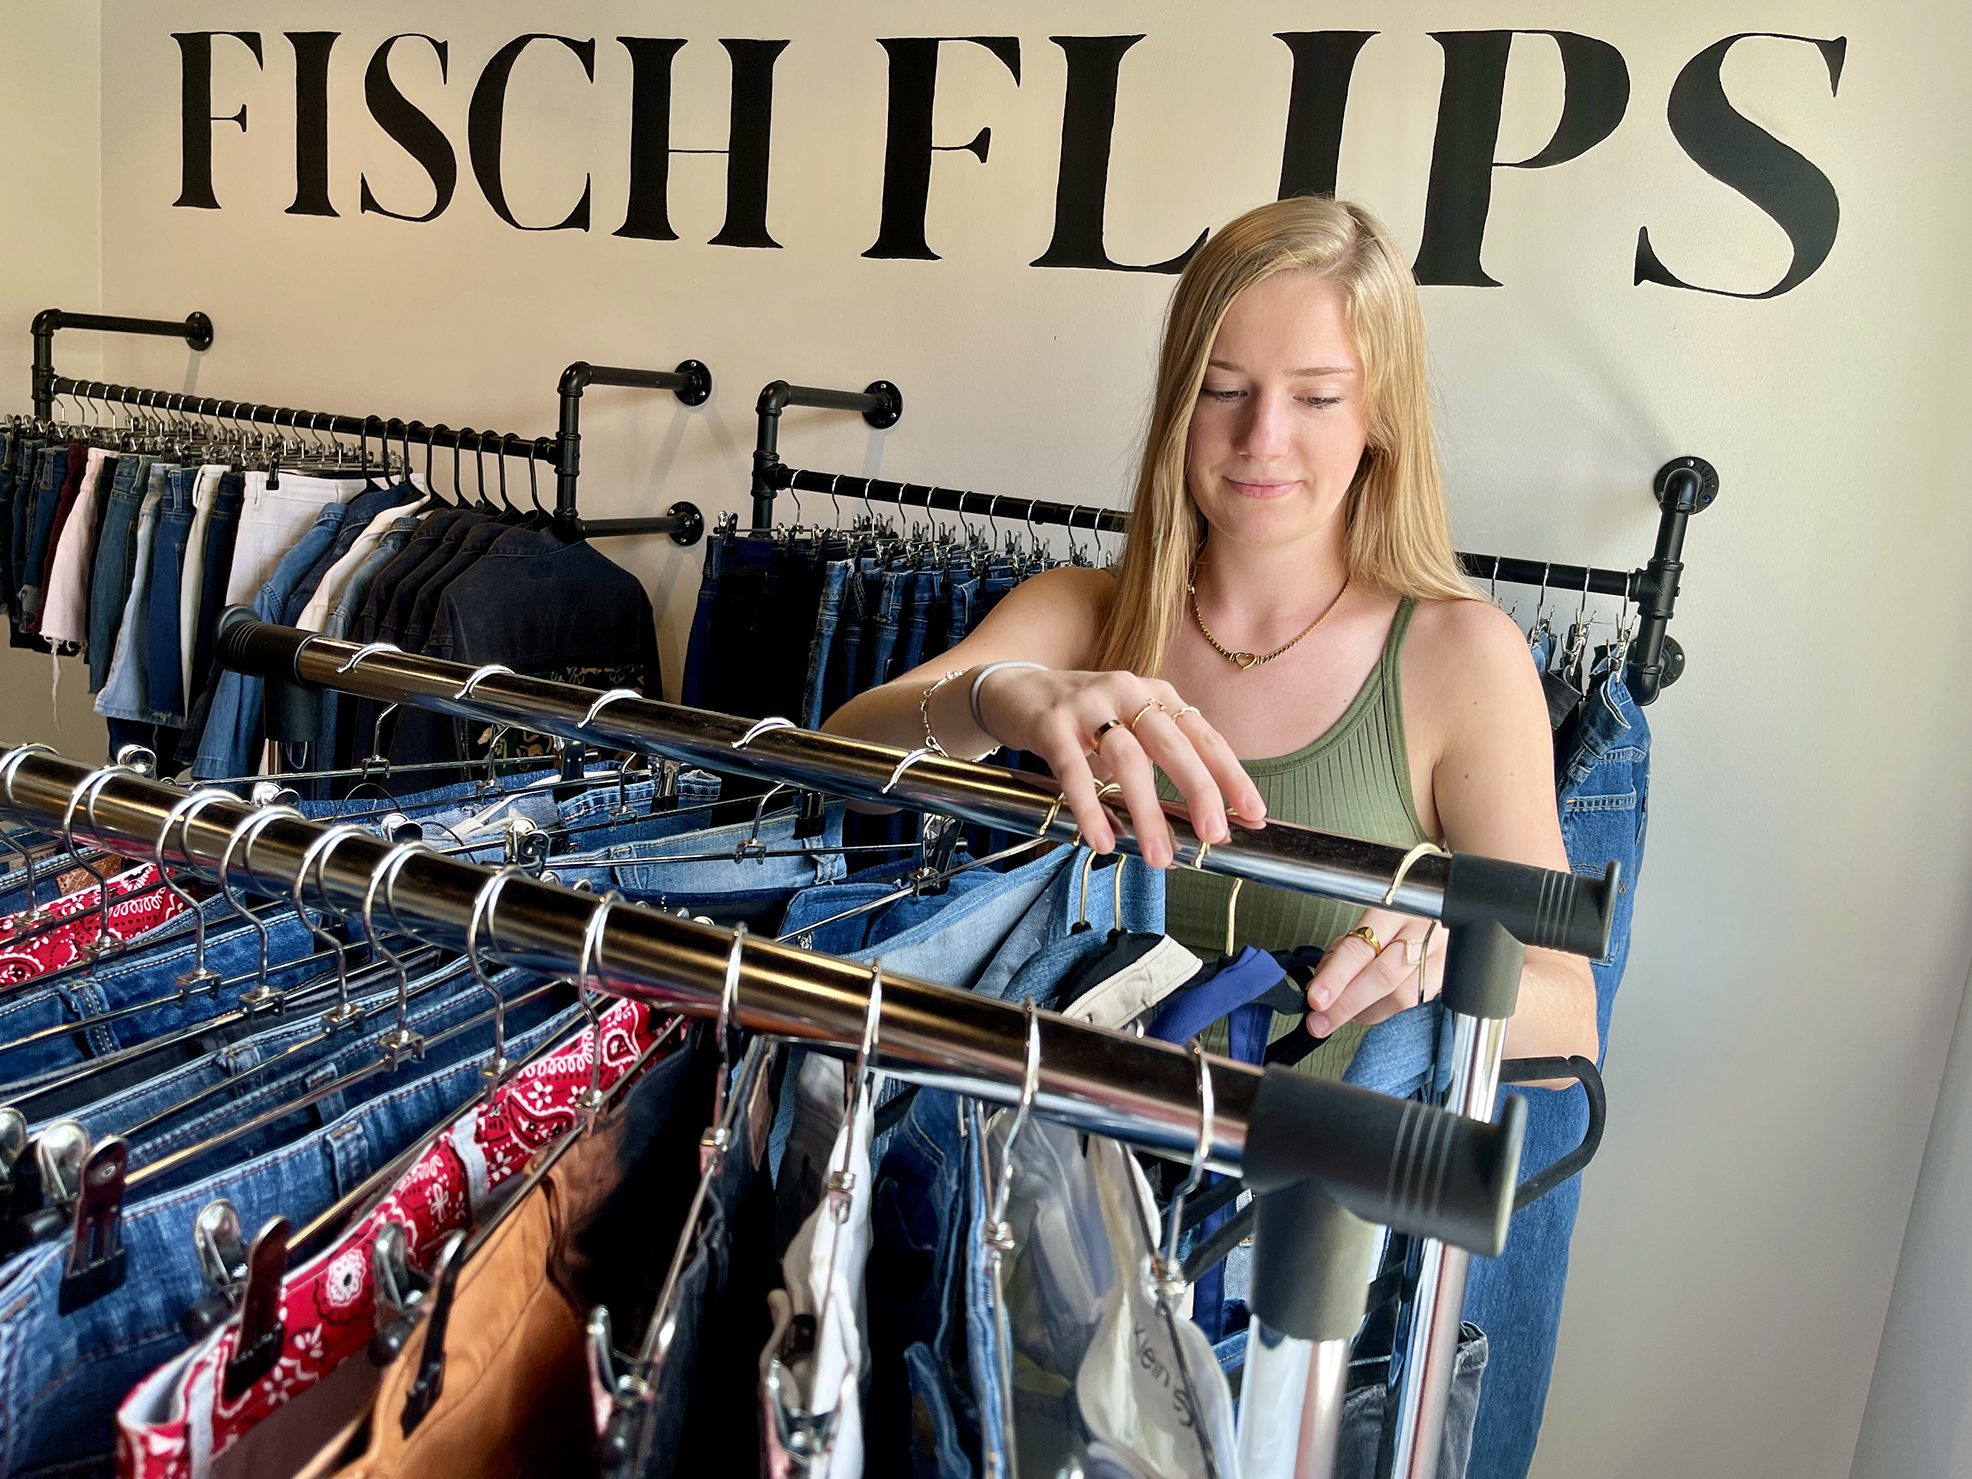 a woman organizes clothes on a rack